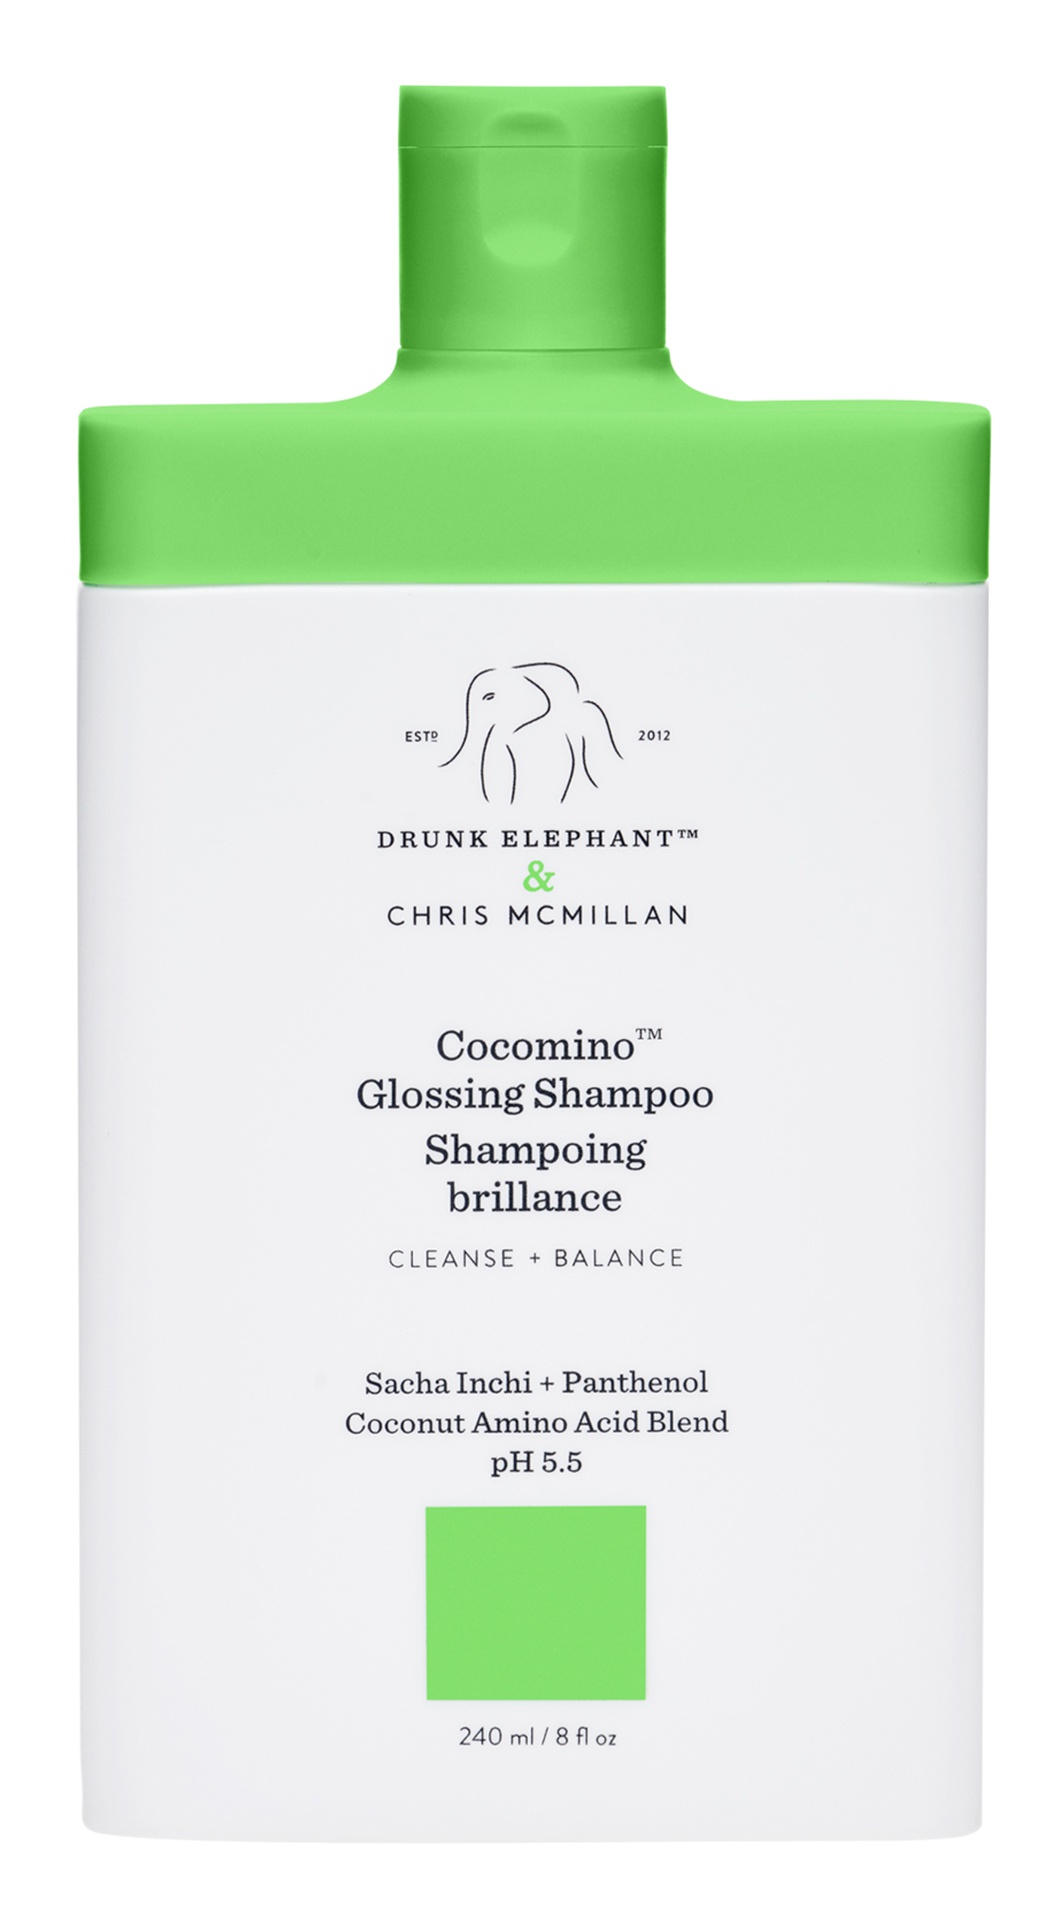 Drunk Elephant Cocomino Glossing Shampoo